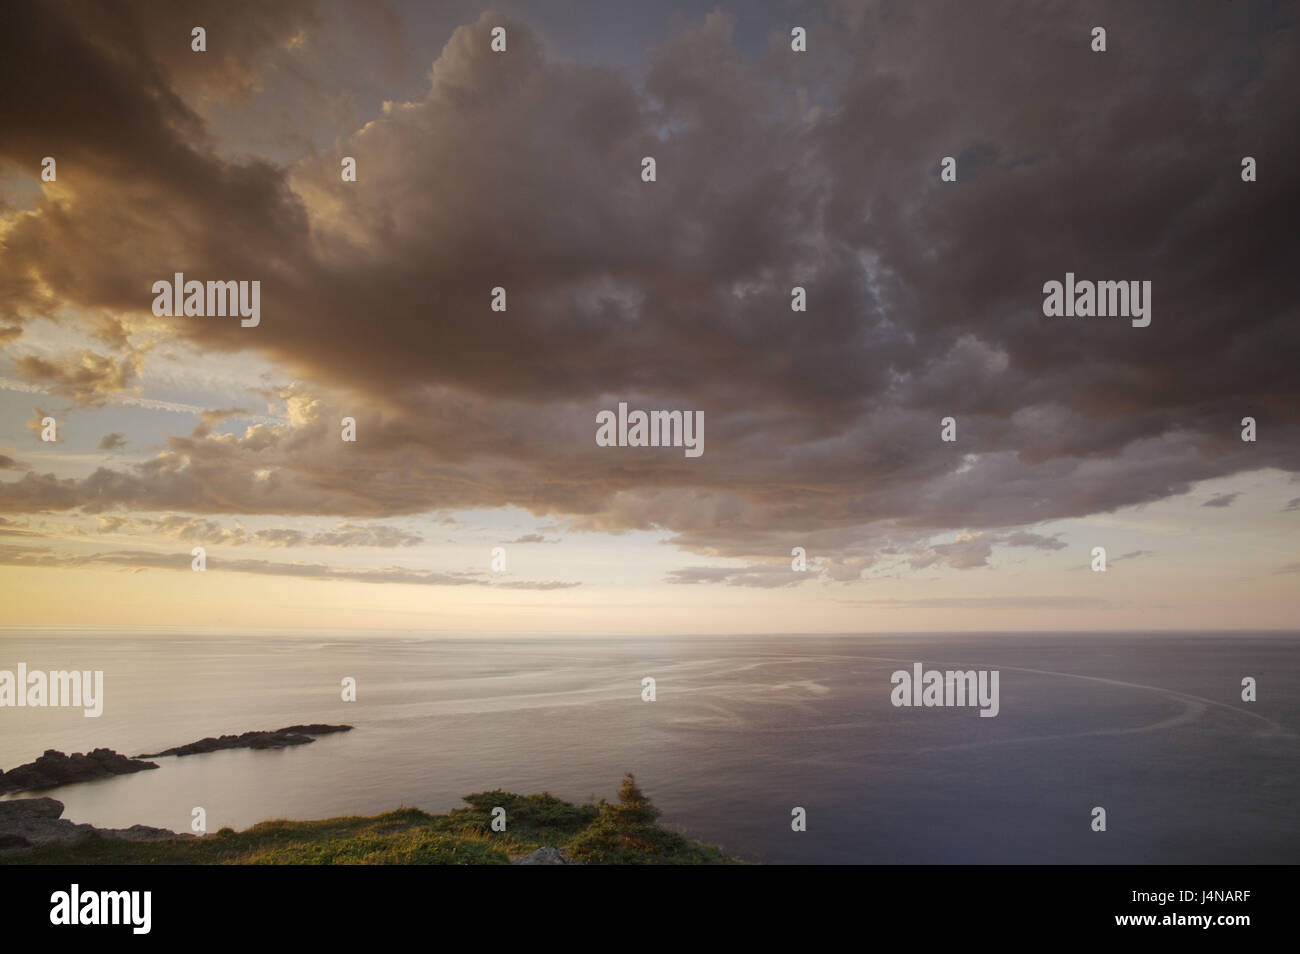 Canada, Twillingate, coast, sea, cloudy sky, evening light, Notre lady Bay, Stock Photo